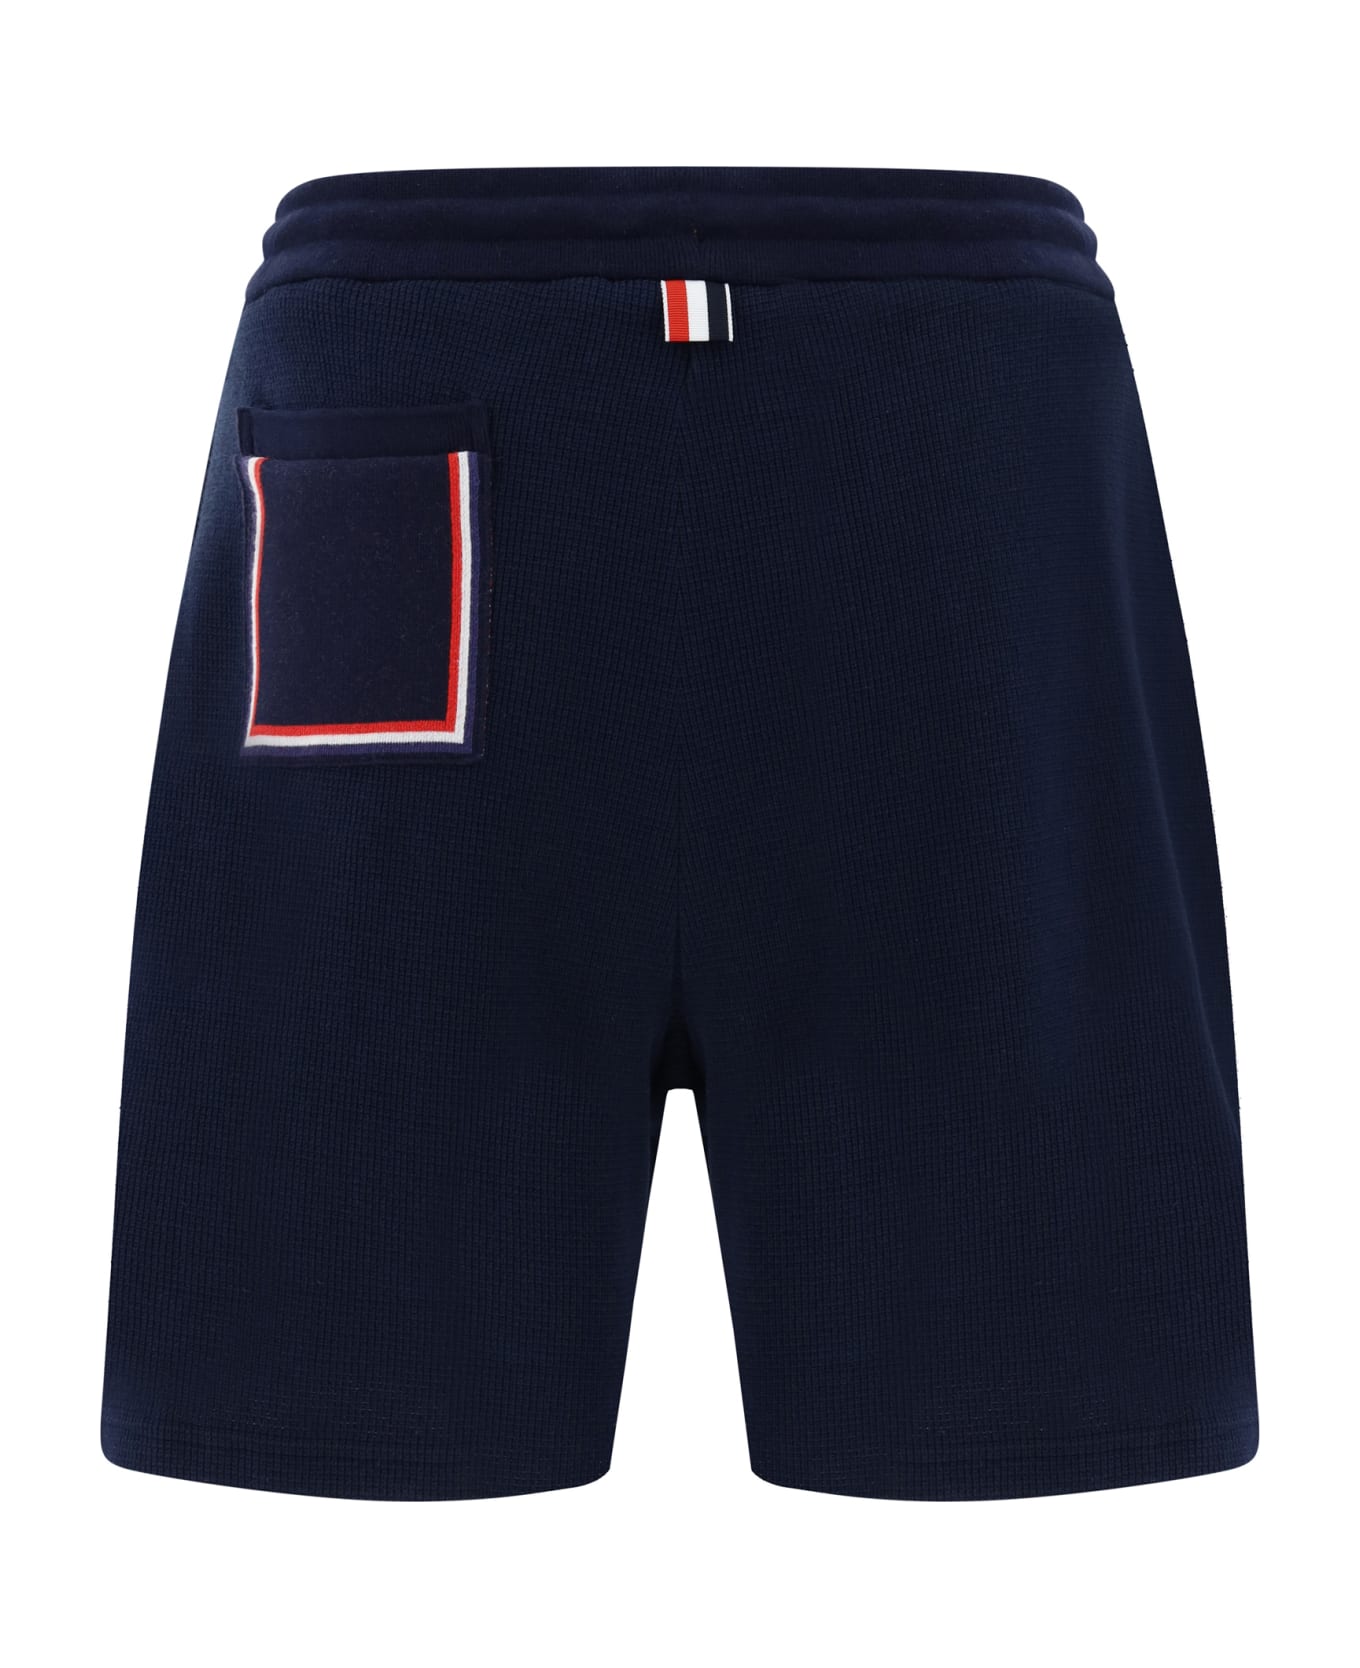 Thom Browne Cotton Knit Bermuda Shorts - Navy